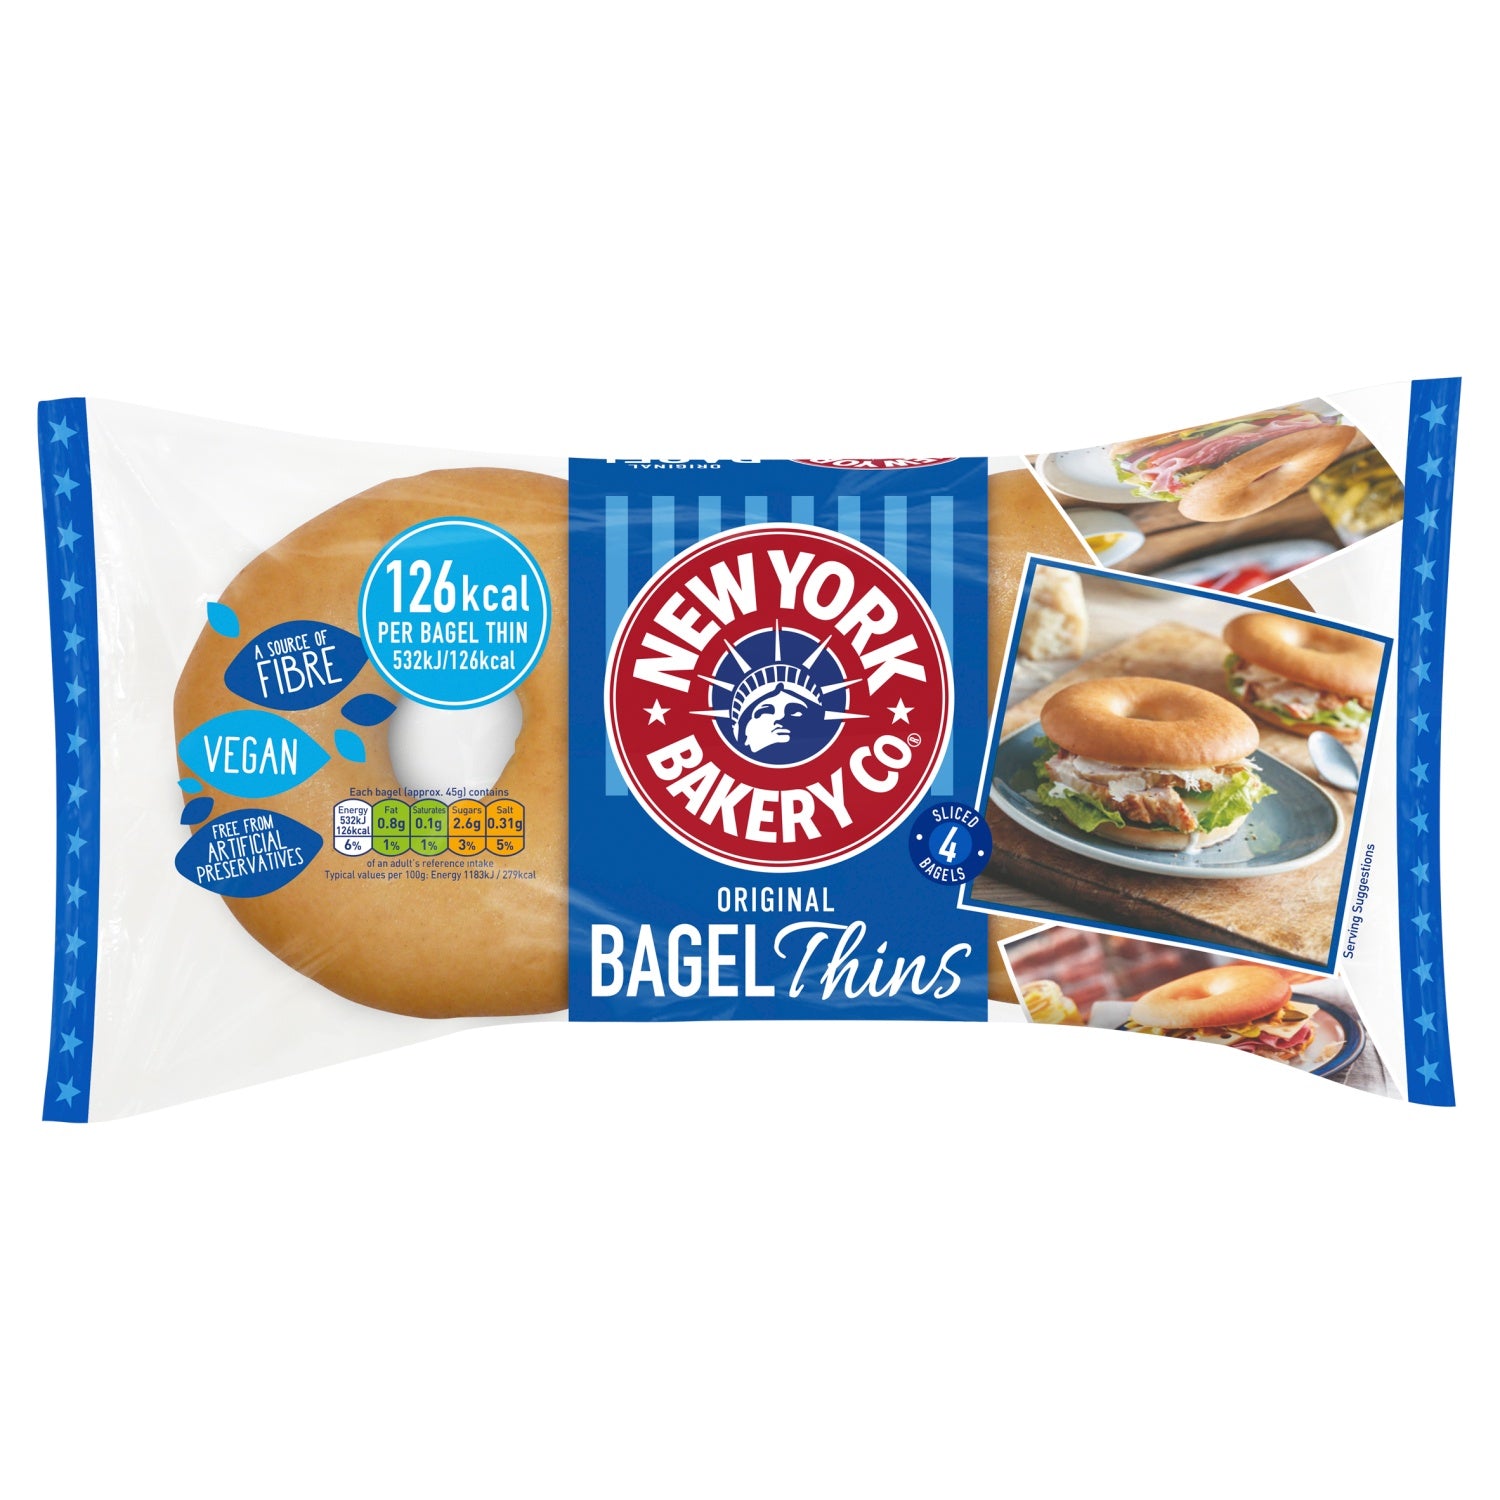 New York Bakery Co 4 Original Bagel Thins